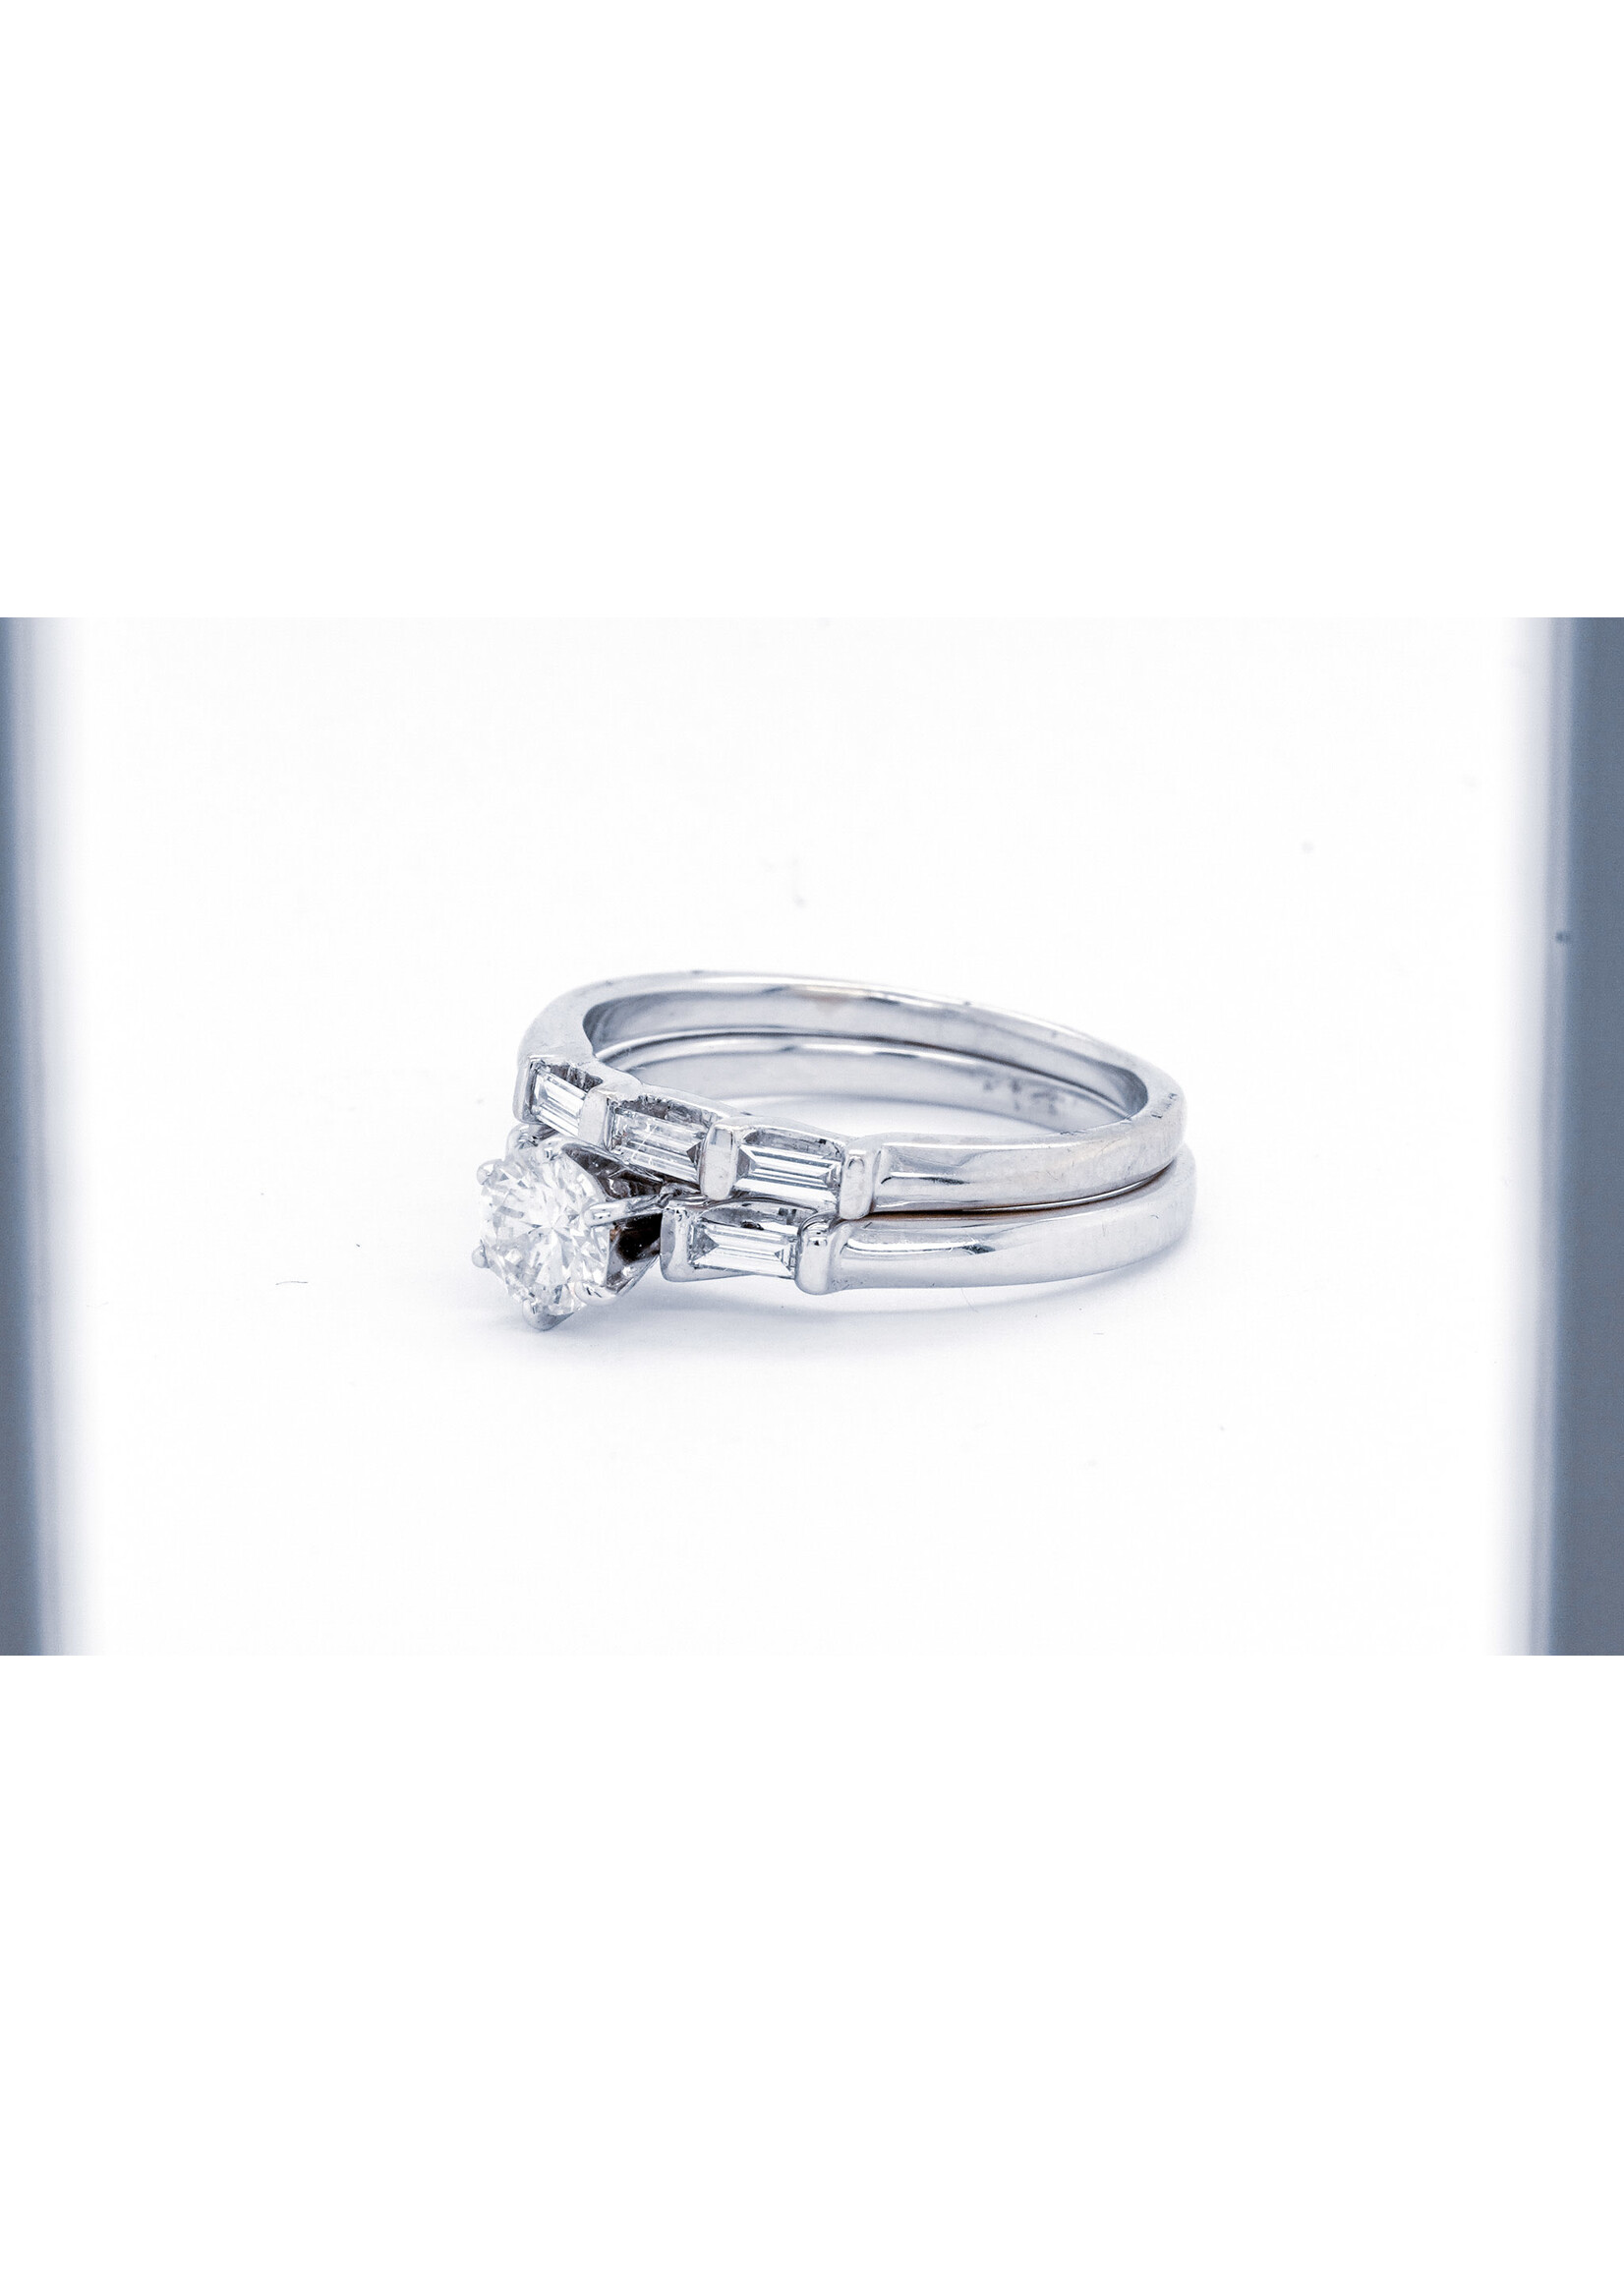 14KW 5.8g 1.00ctw (.64ctr) Diamond Engagement Ring (size 7.5)